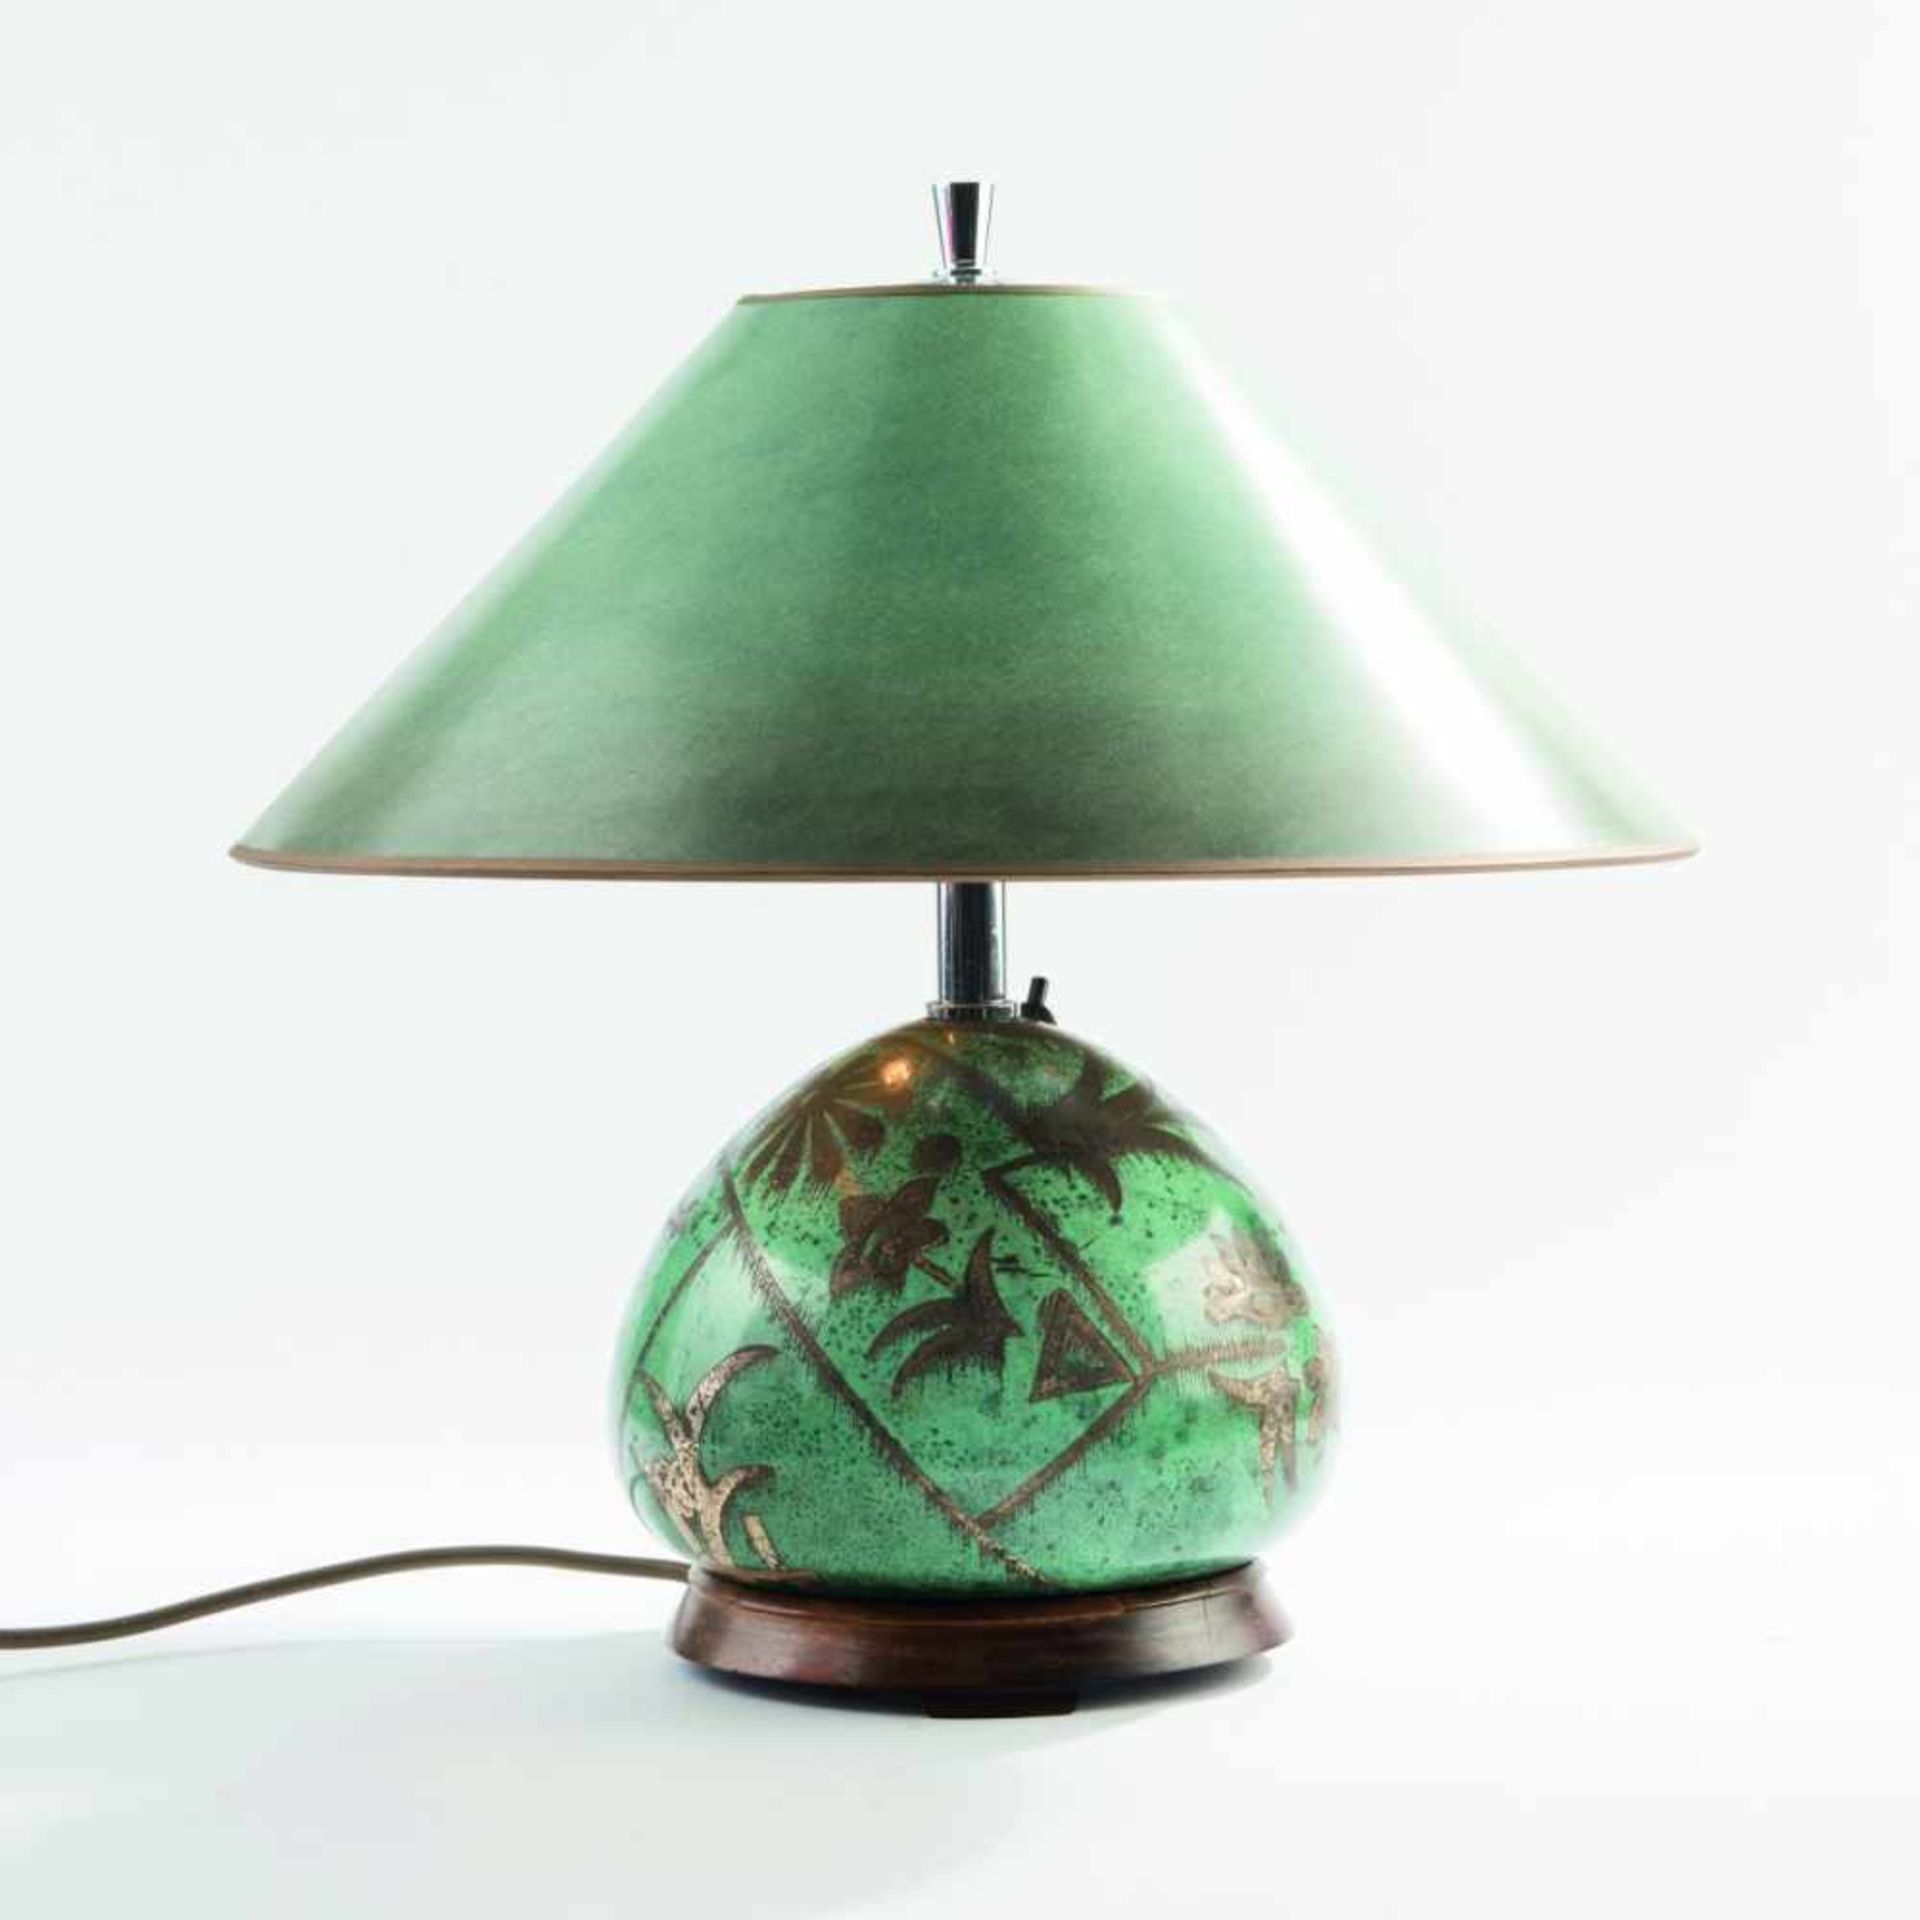 WMF, Geislingen, Table lamp 'Ikora', c. 1930Table lamp 'Ikora', c. 1930H. 40.3 cm, D. 40 cm. So-